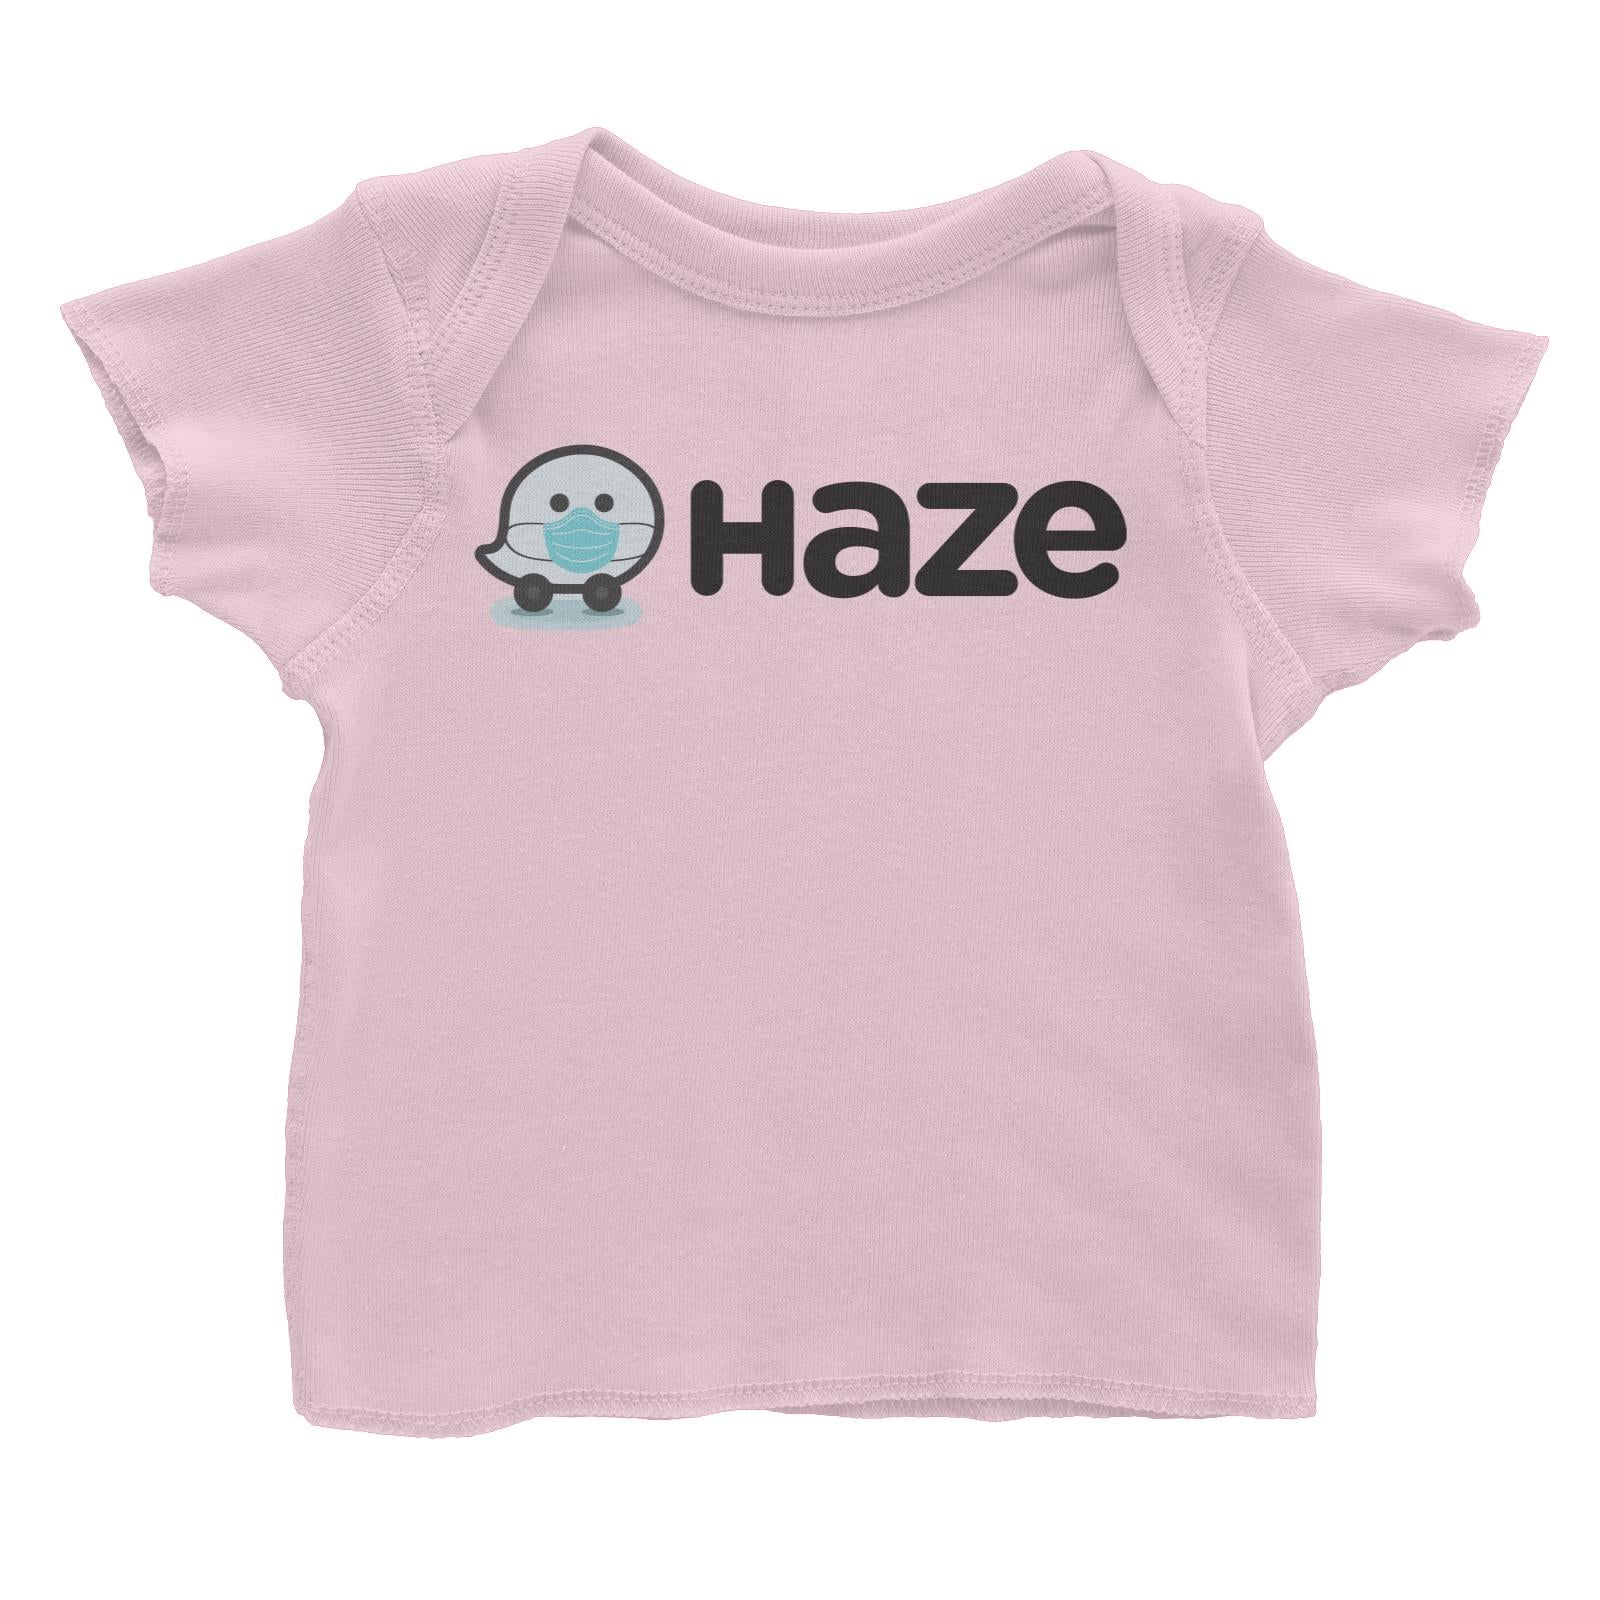 Slang Statement Haze Baby T-Shirt